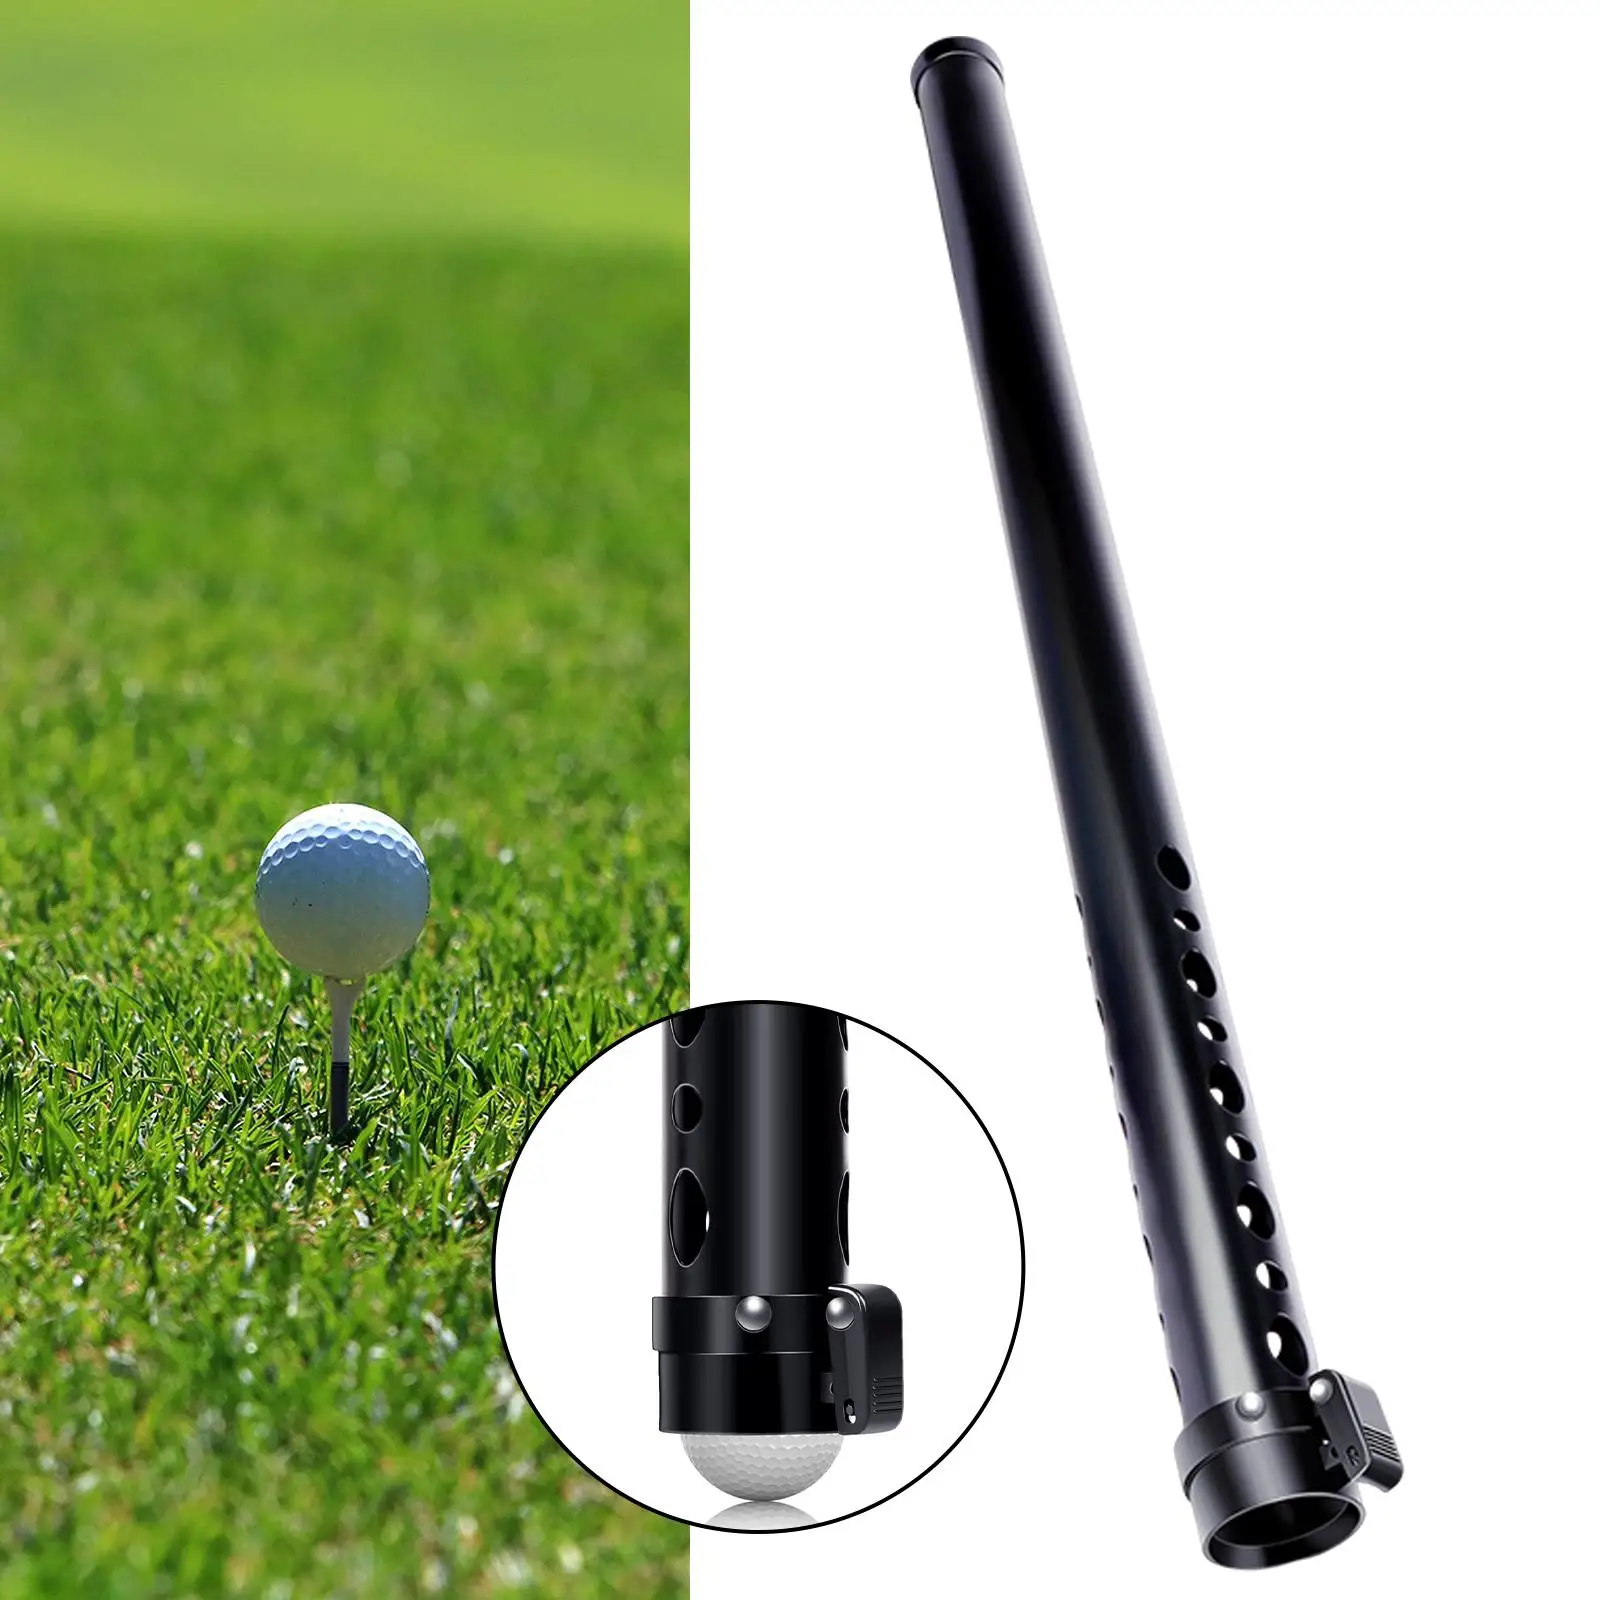 Professional Golf Ball Retriever Picker Shag Tube Golfer Gift Outdoor Grabber Holds 22 Balls Pick up Golf Practice Aid Equipment